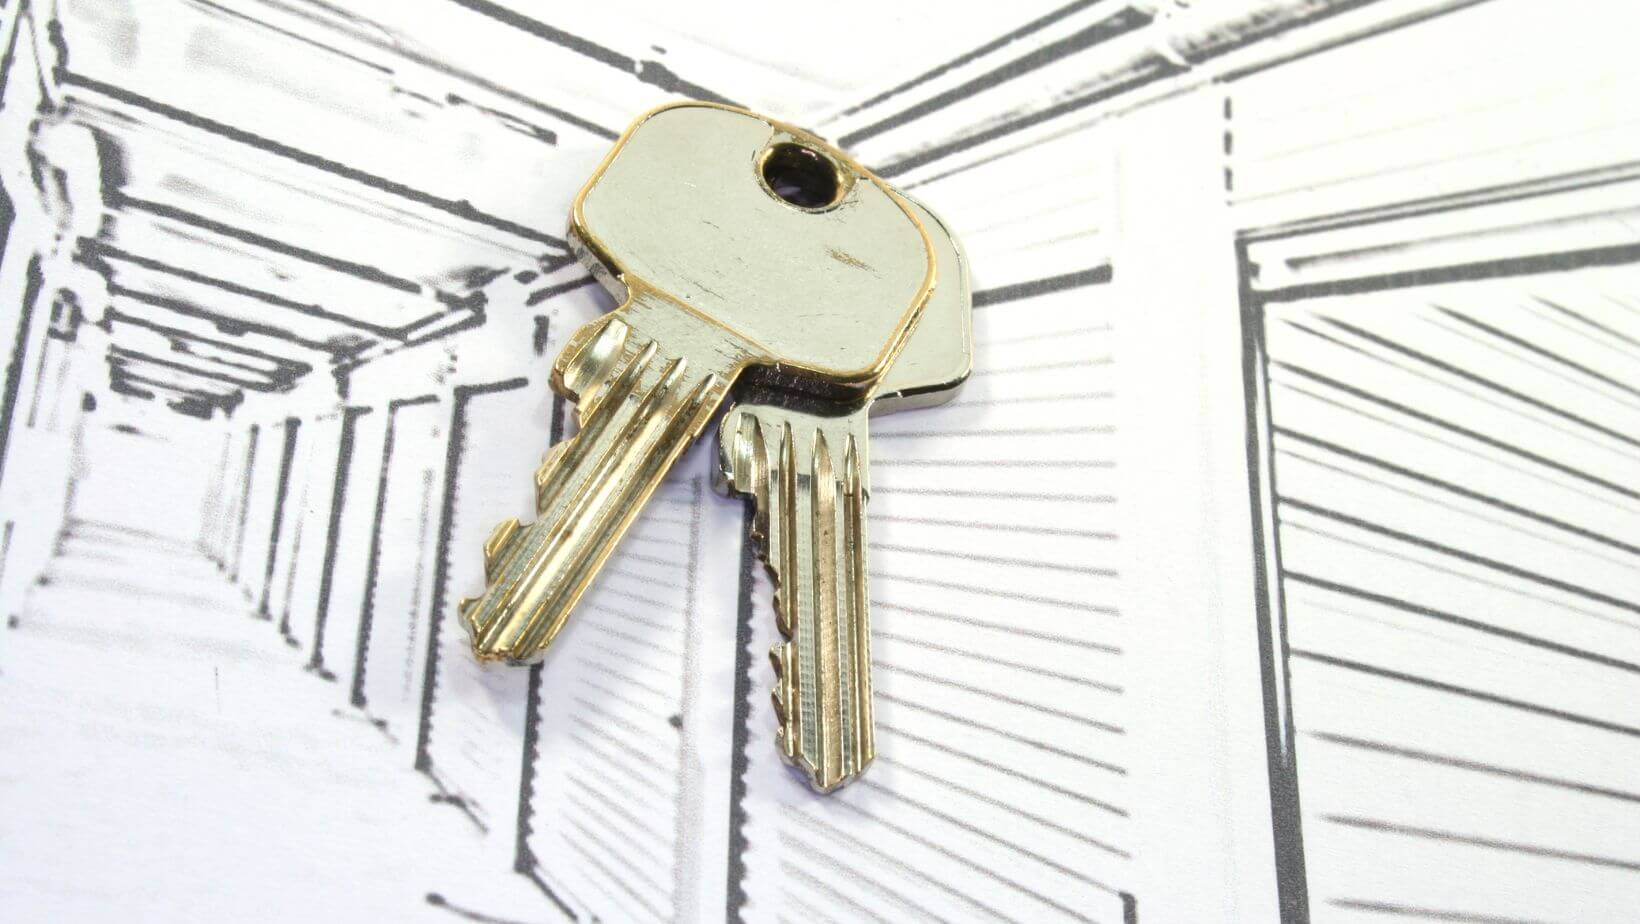 A pair of keys resting on a storage door.